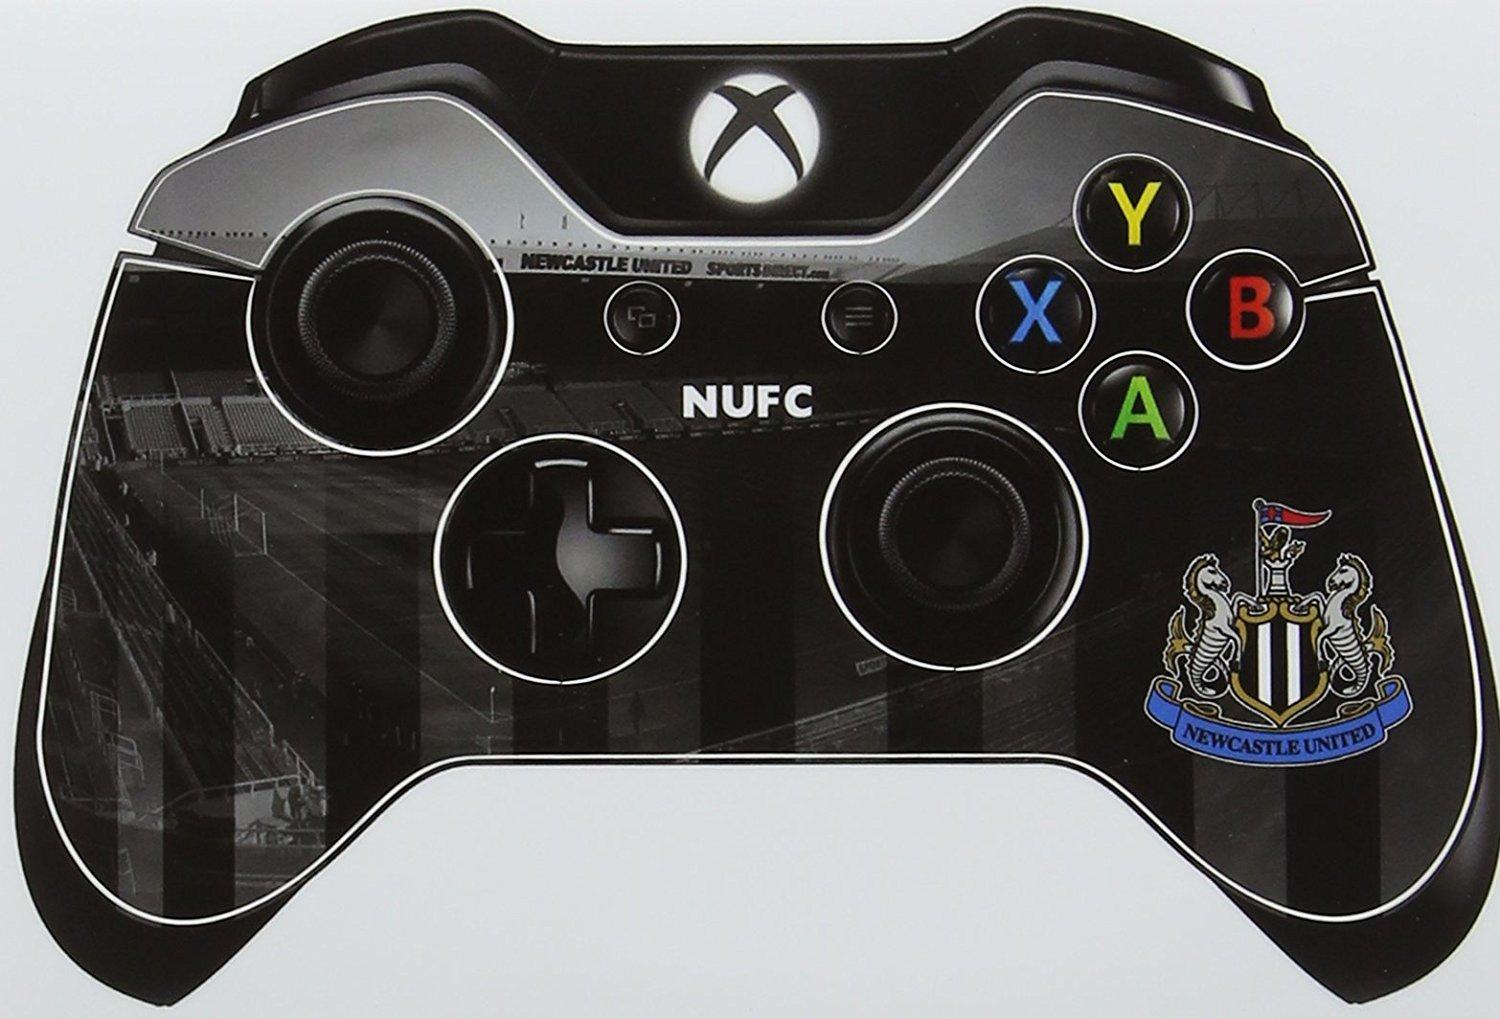 inToro Newcastle Utd FC Skin for Xbox One Controller